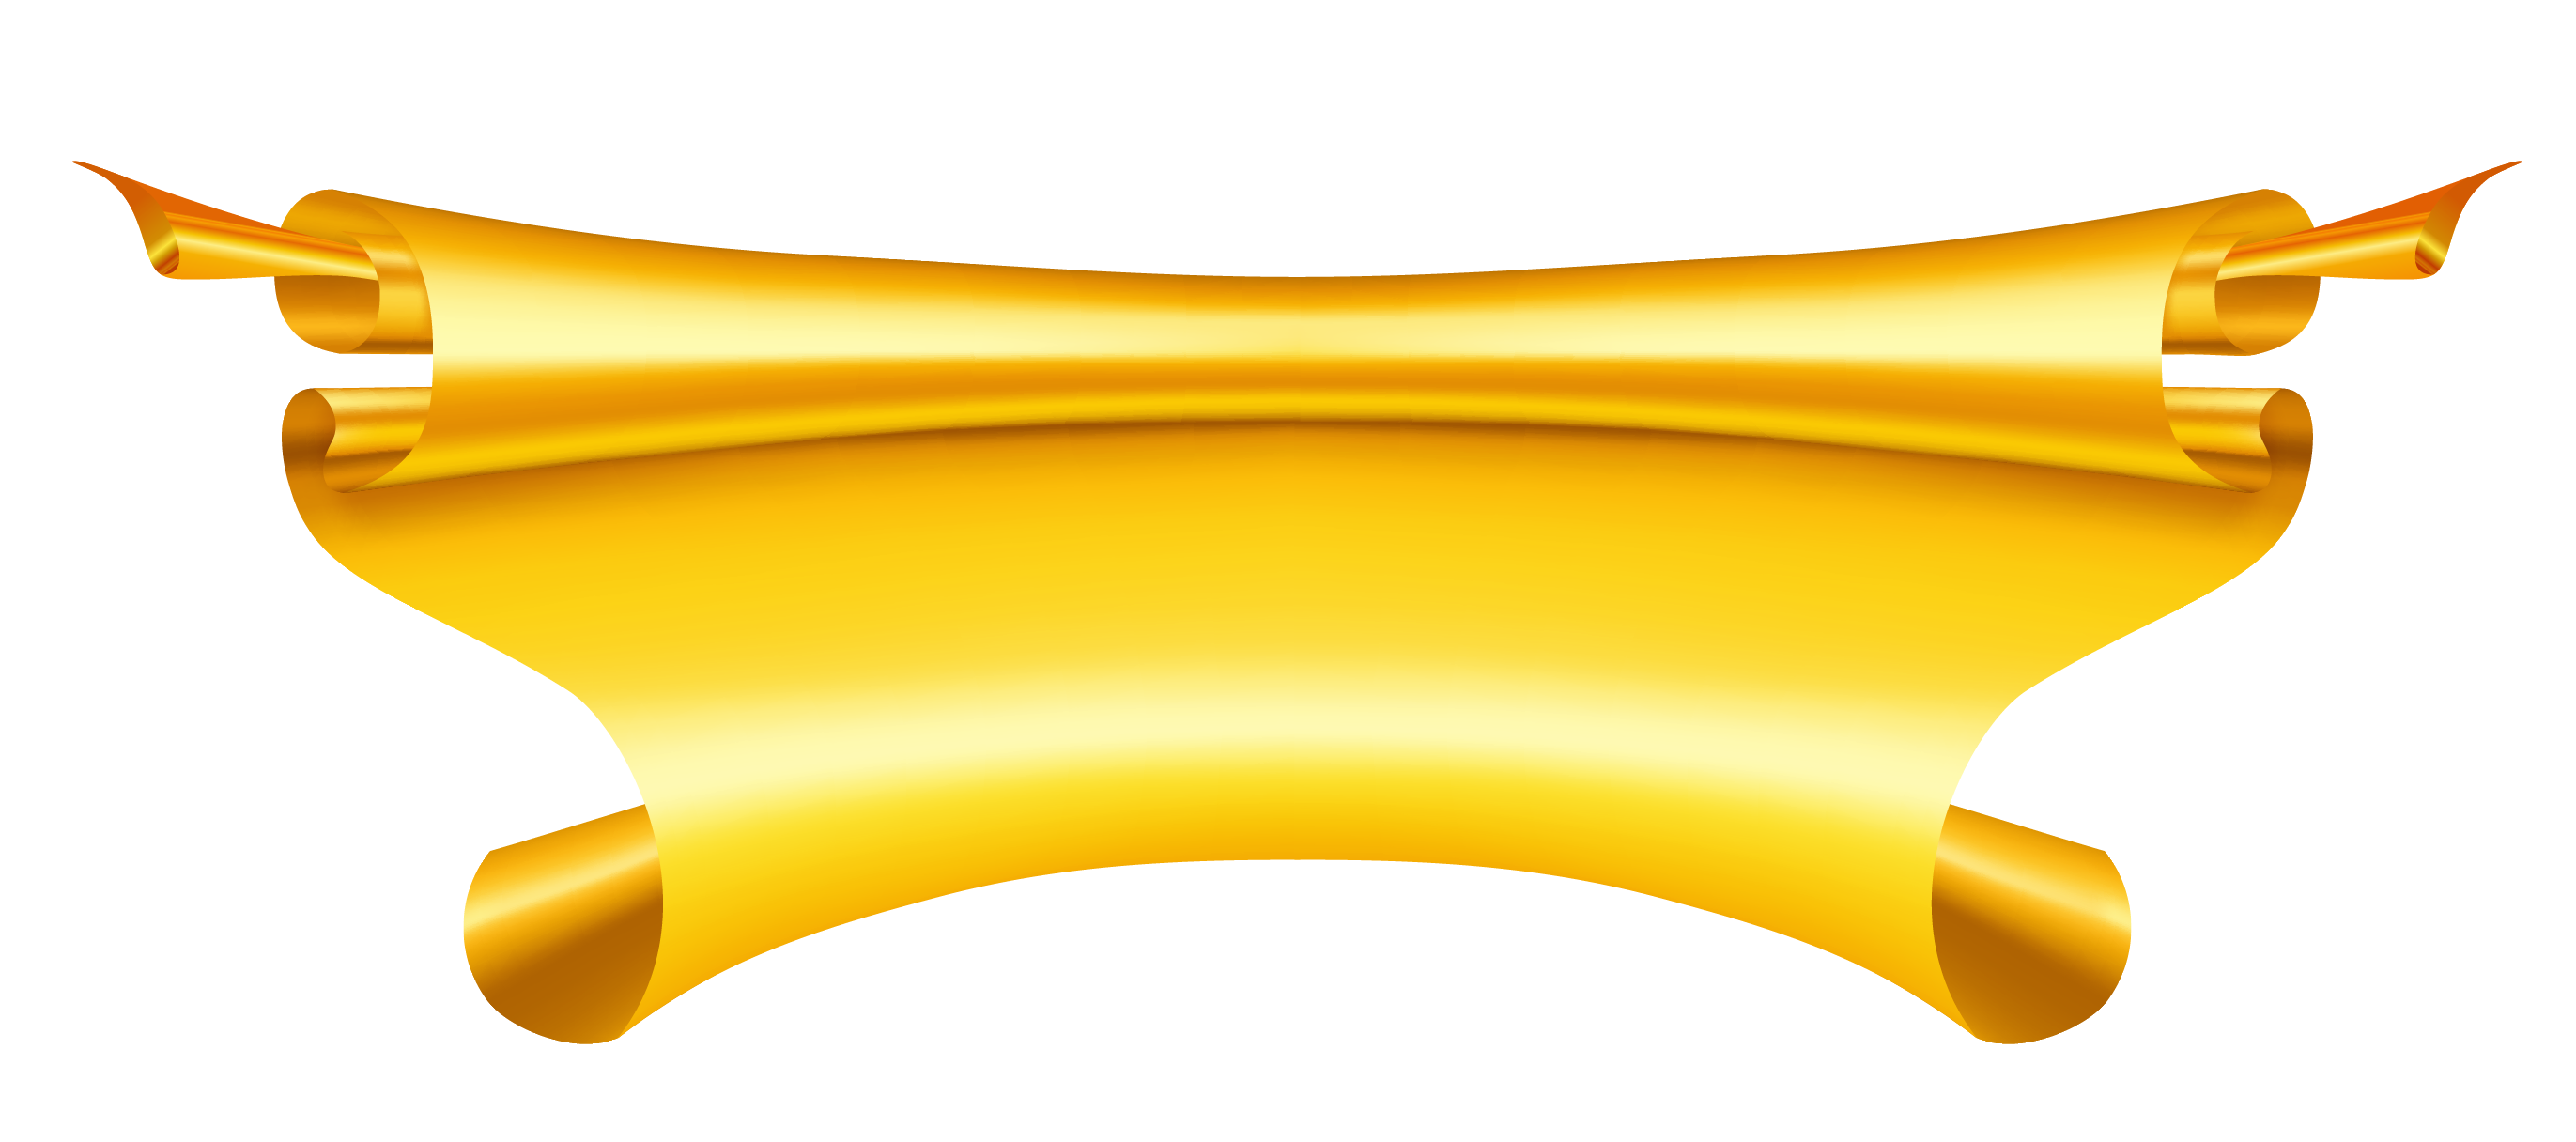 Pita emas PNG Gambar berkualitas tinggi